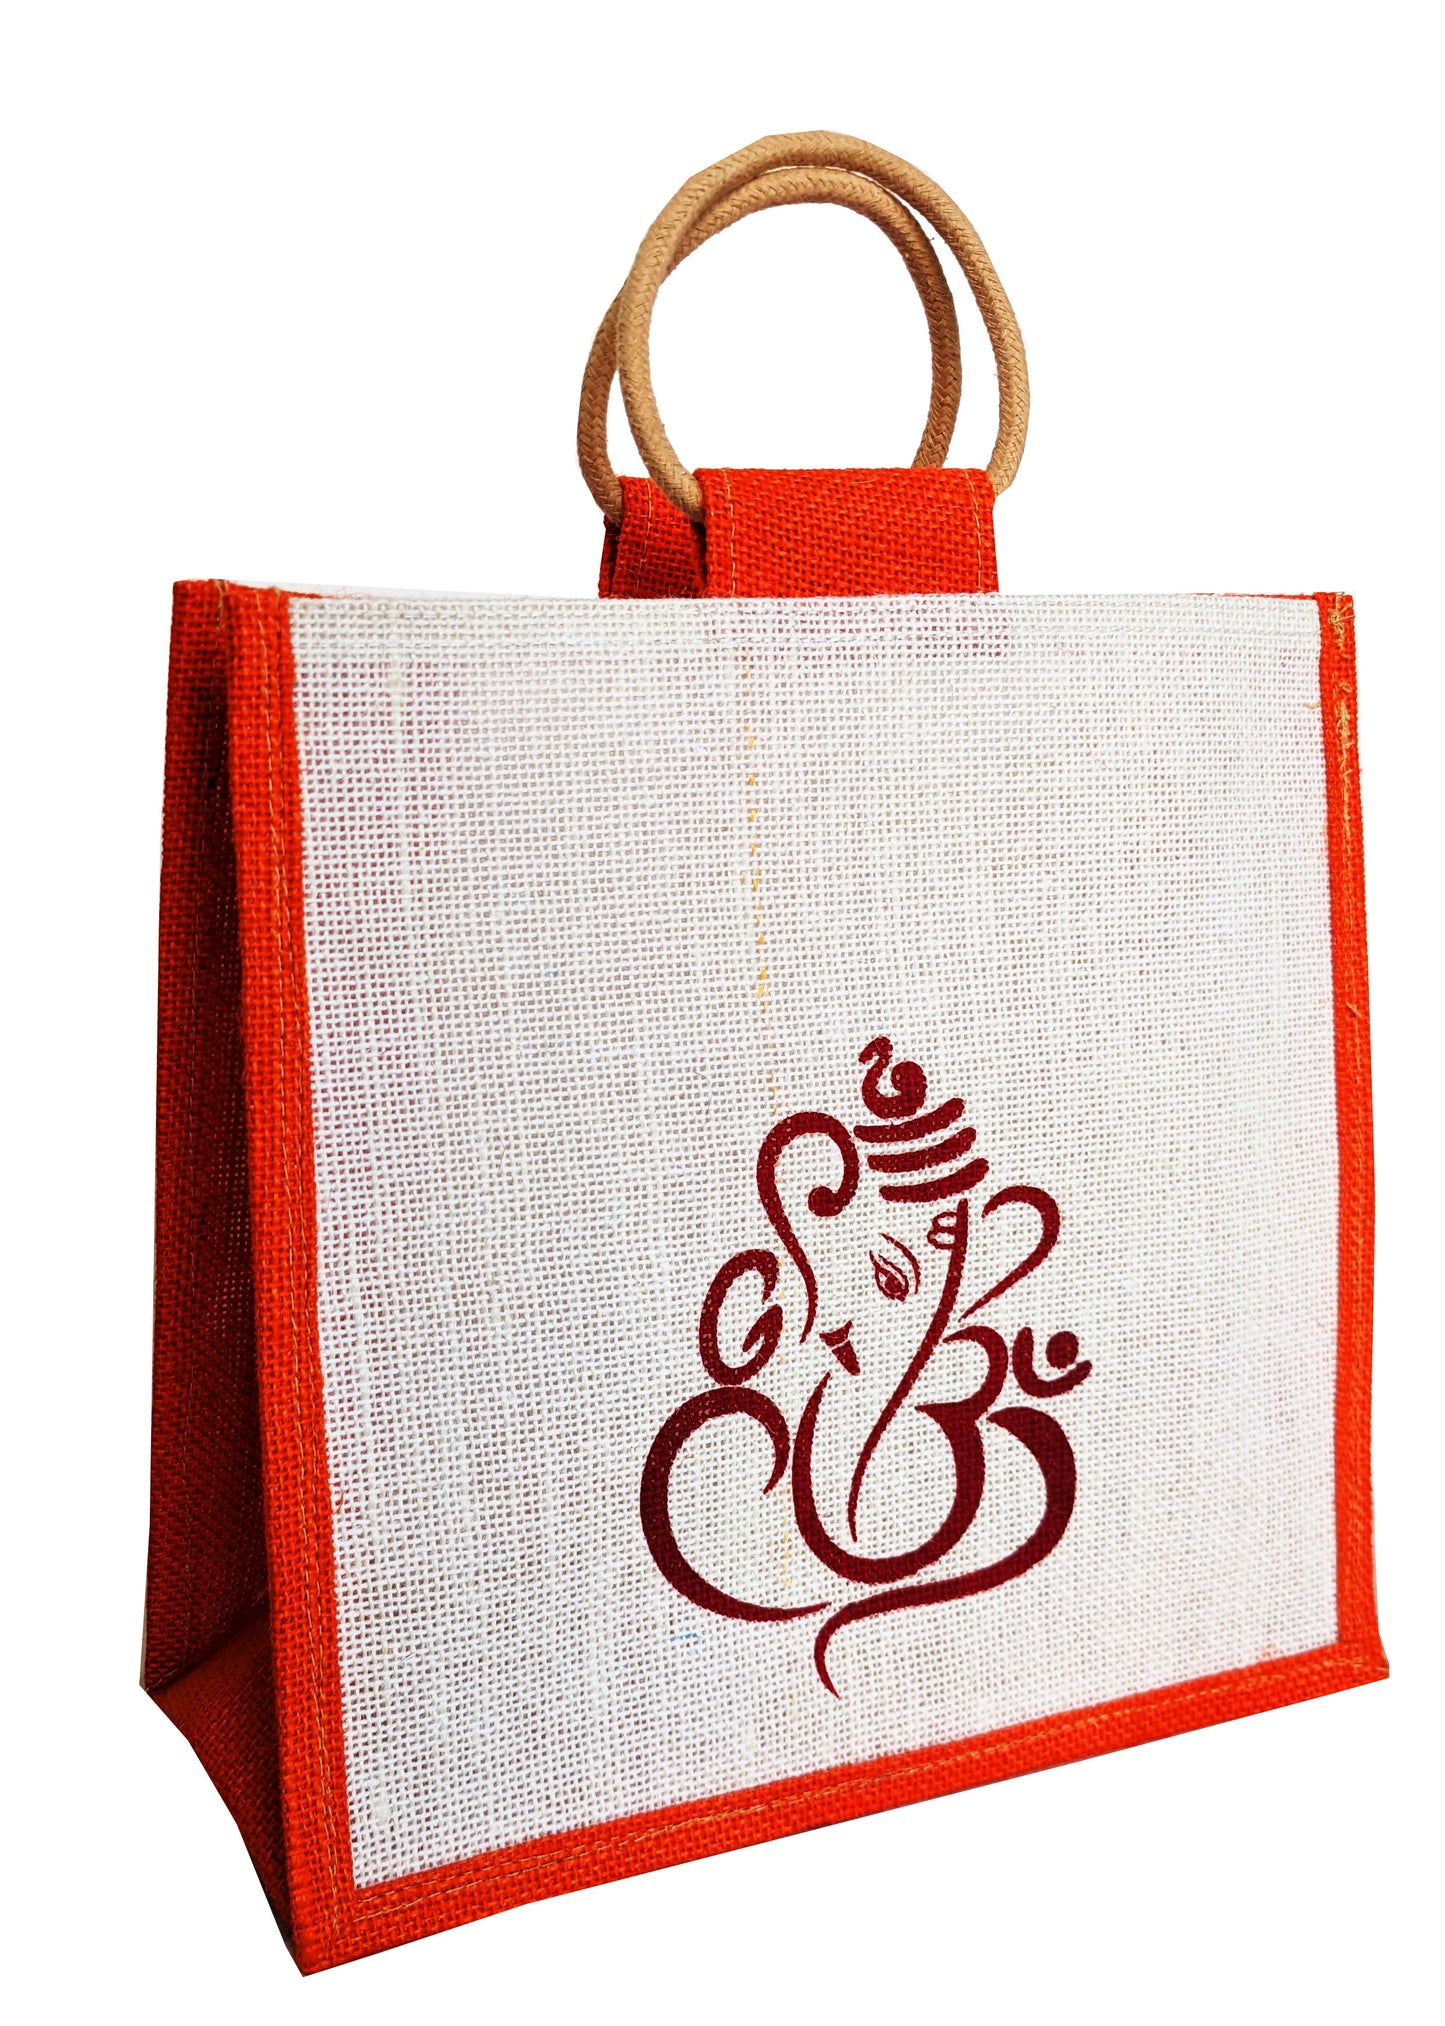 Elegant Jute Wedding Favor Bags with Orange Color Personalized Jute Bags for a Memorable Wedding Celebration pack of 2,4